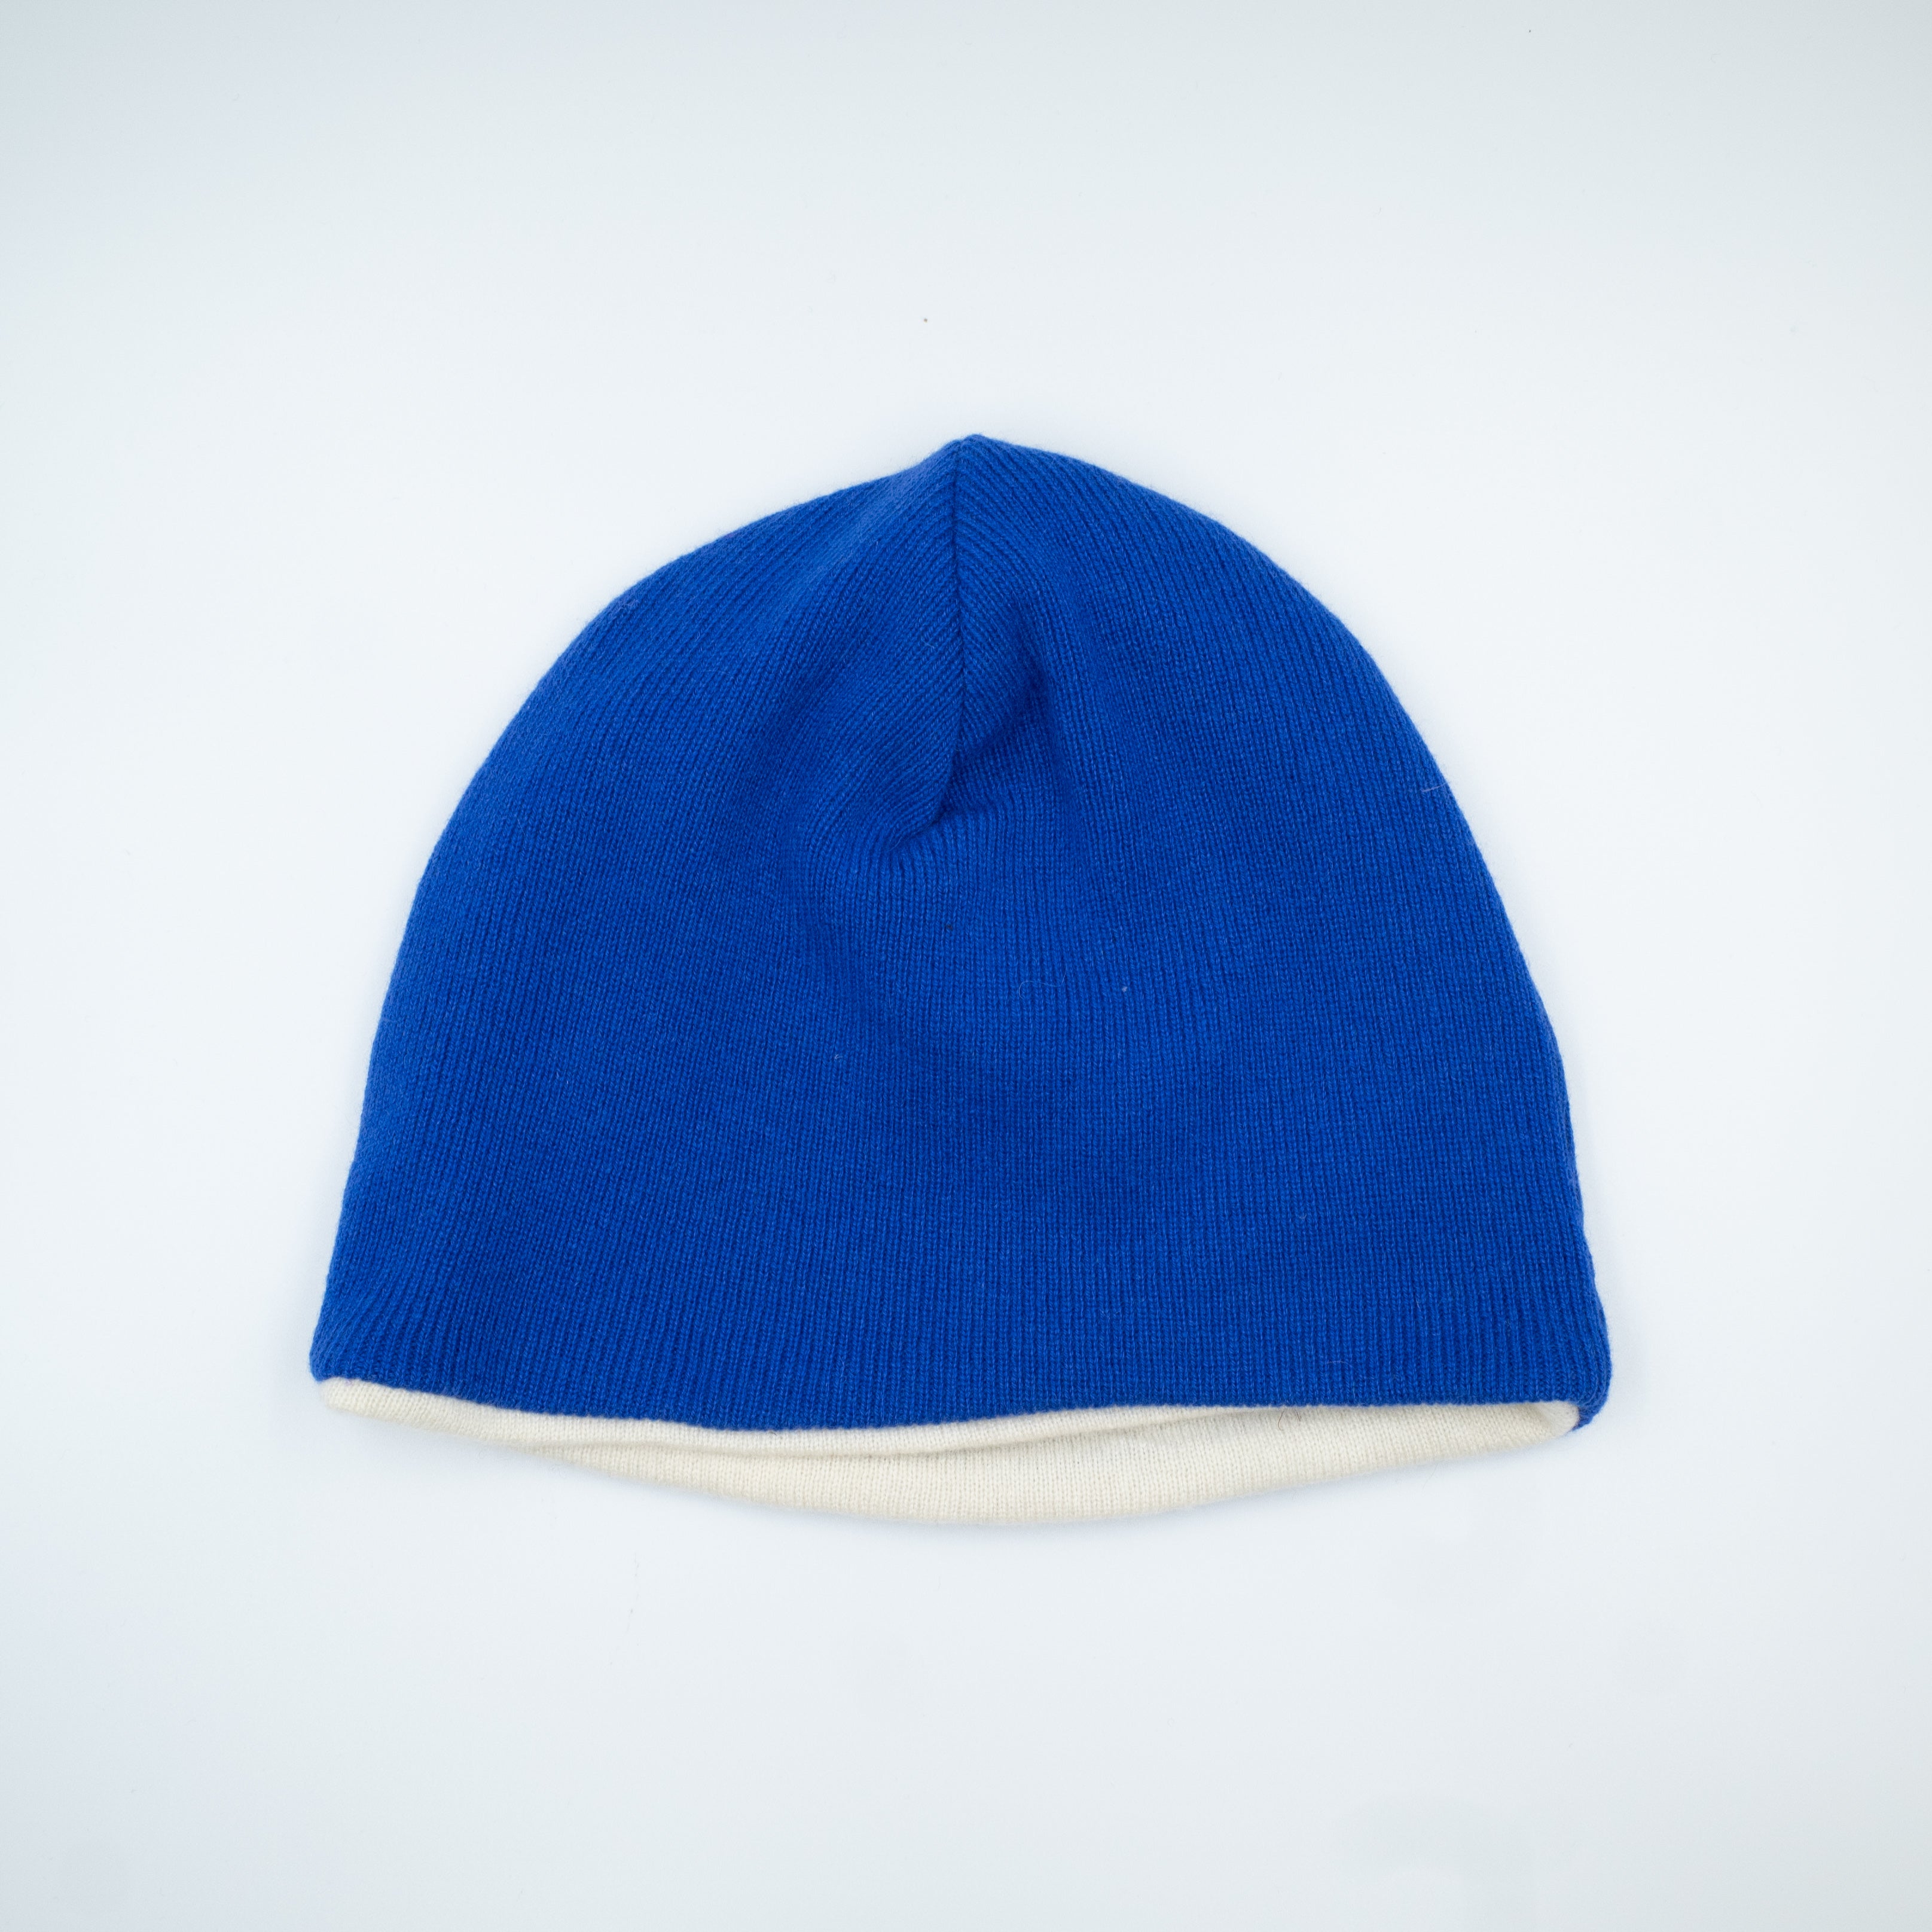 Admiral Blue and Cream Cashmere Beanie Hat